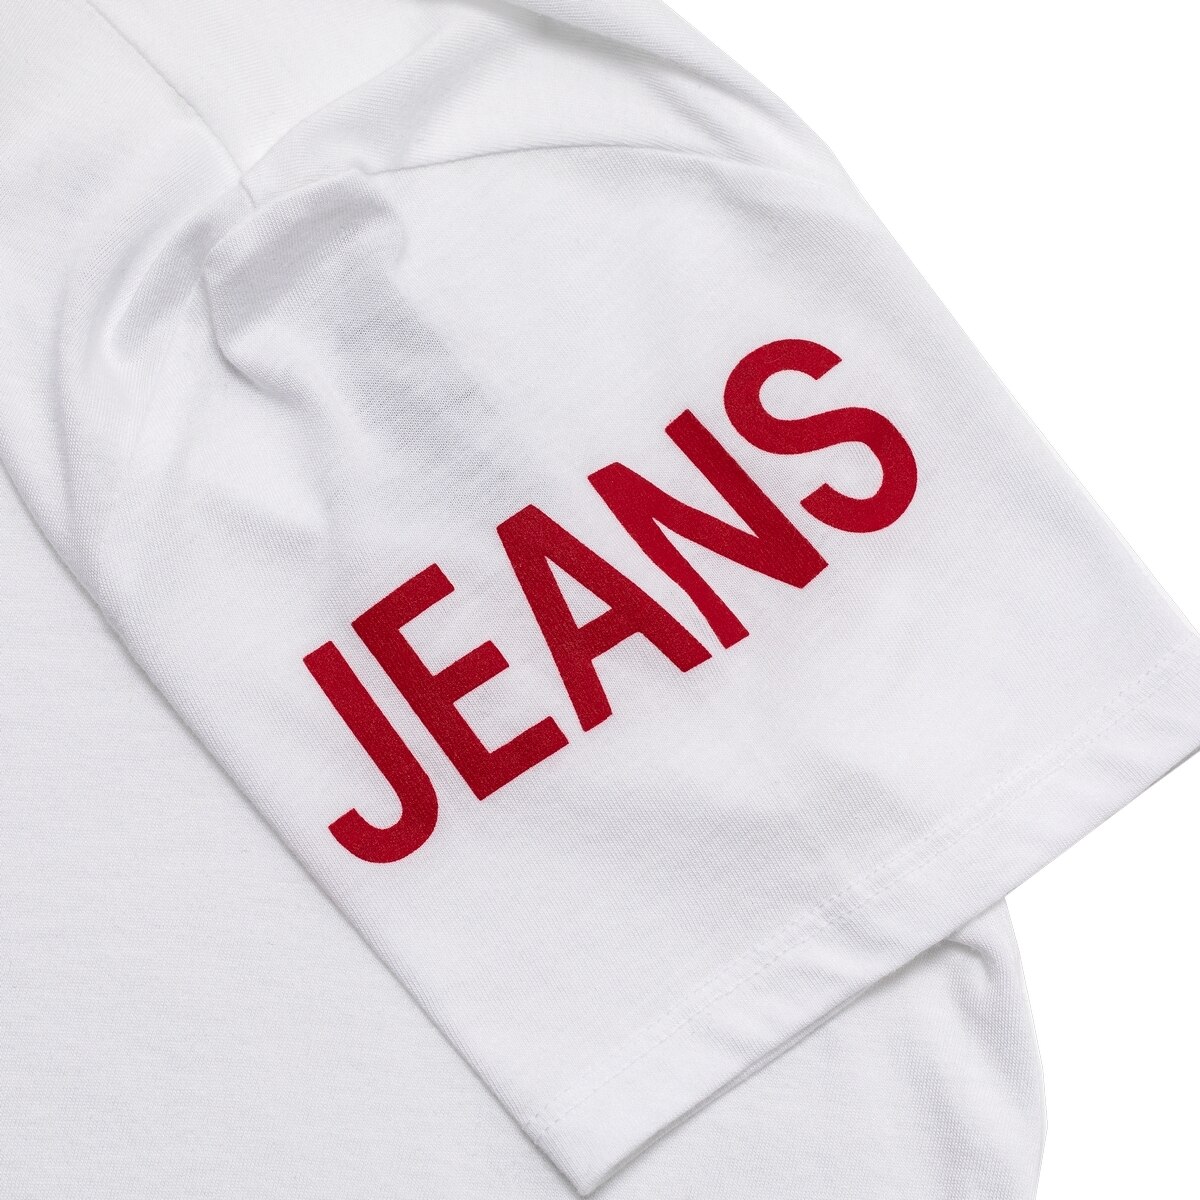 Calvin Klein Jeans 女短袖T恤 白 L